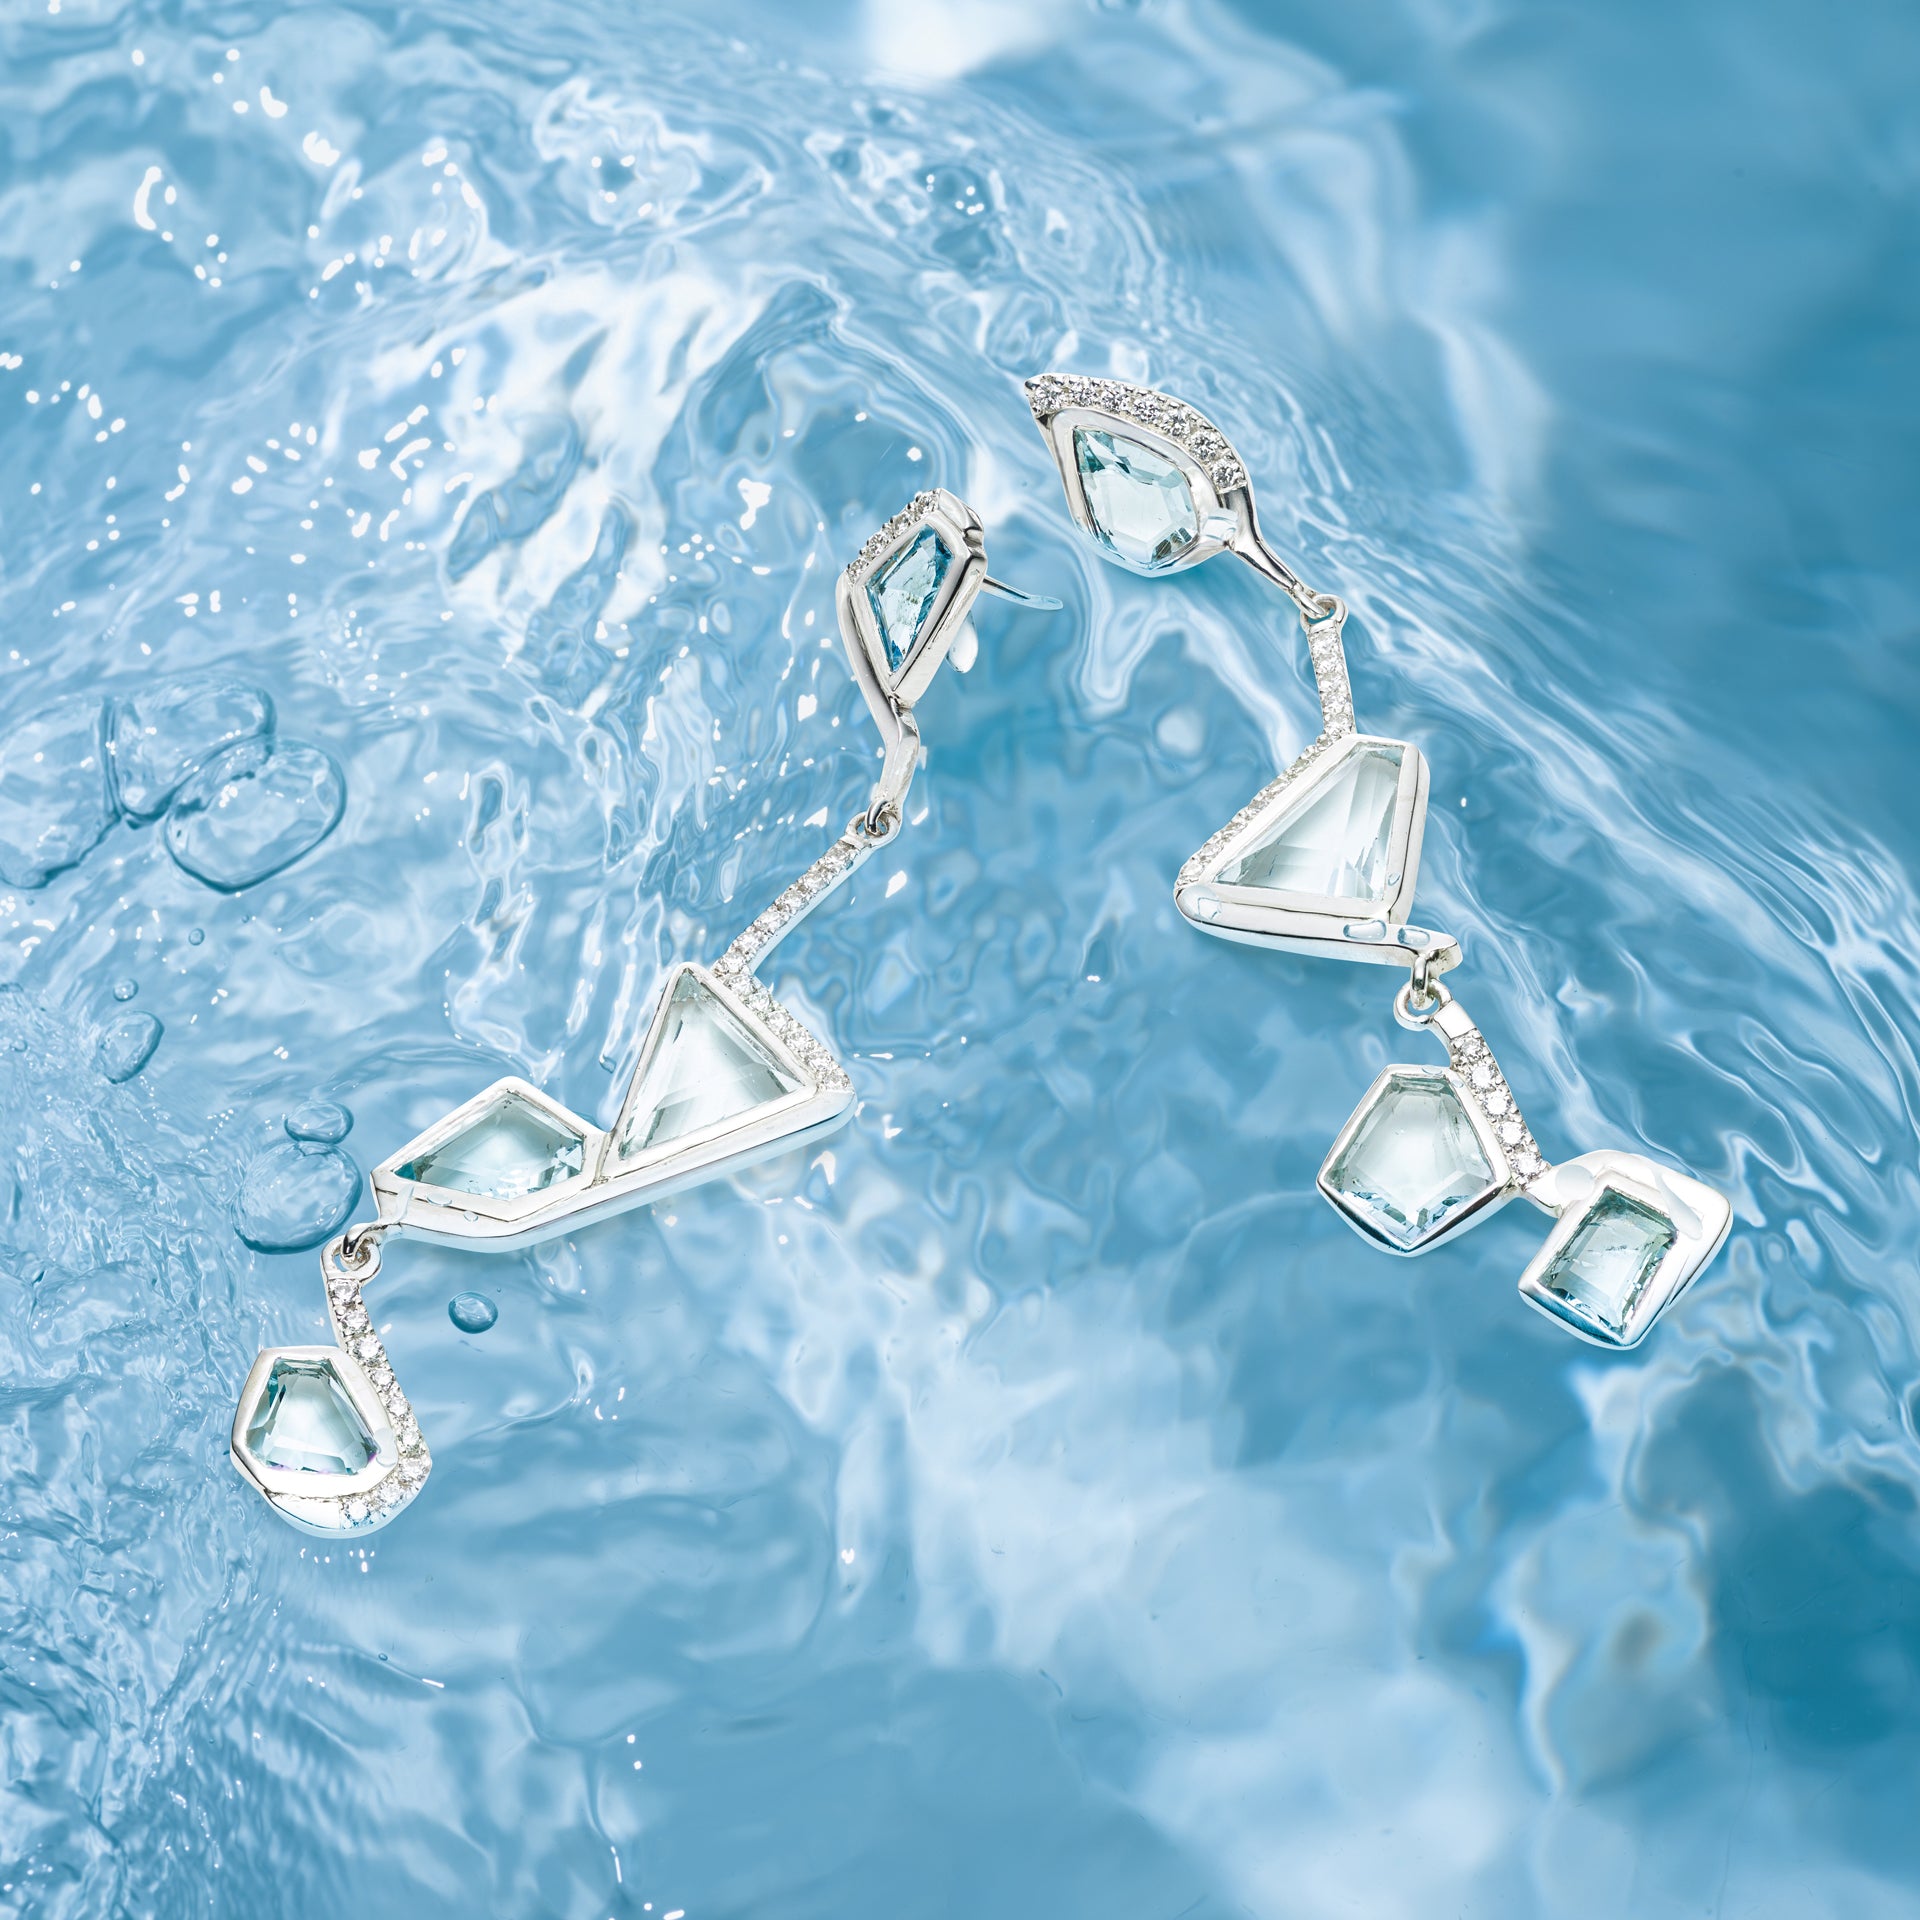 Diamond & Aquamarine Earrings